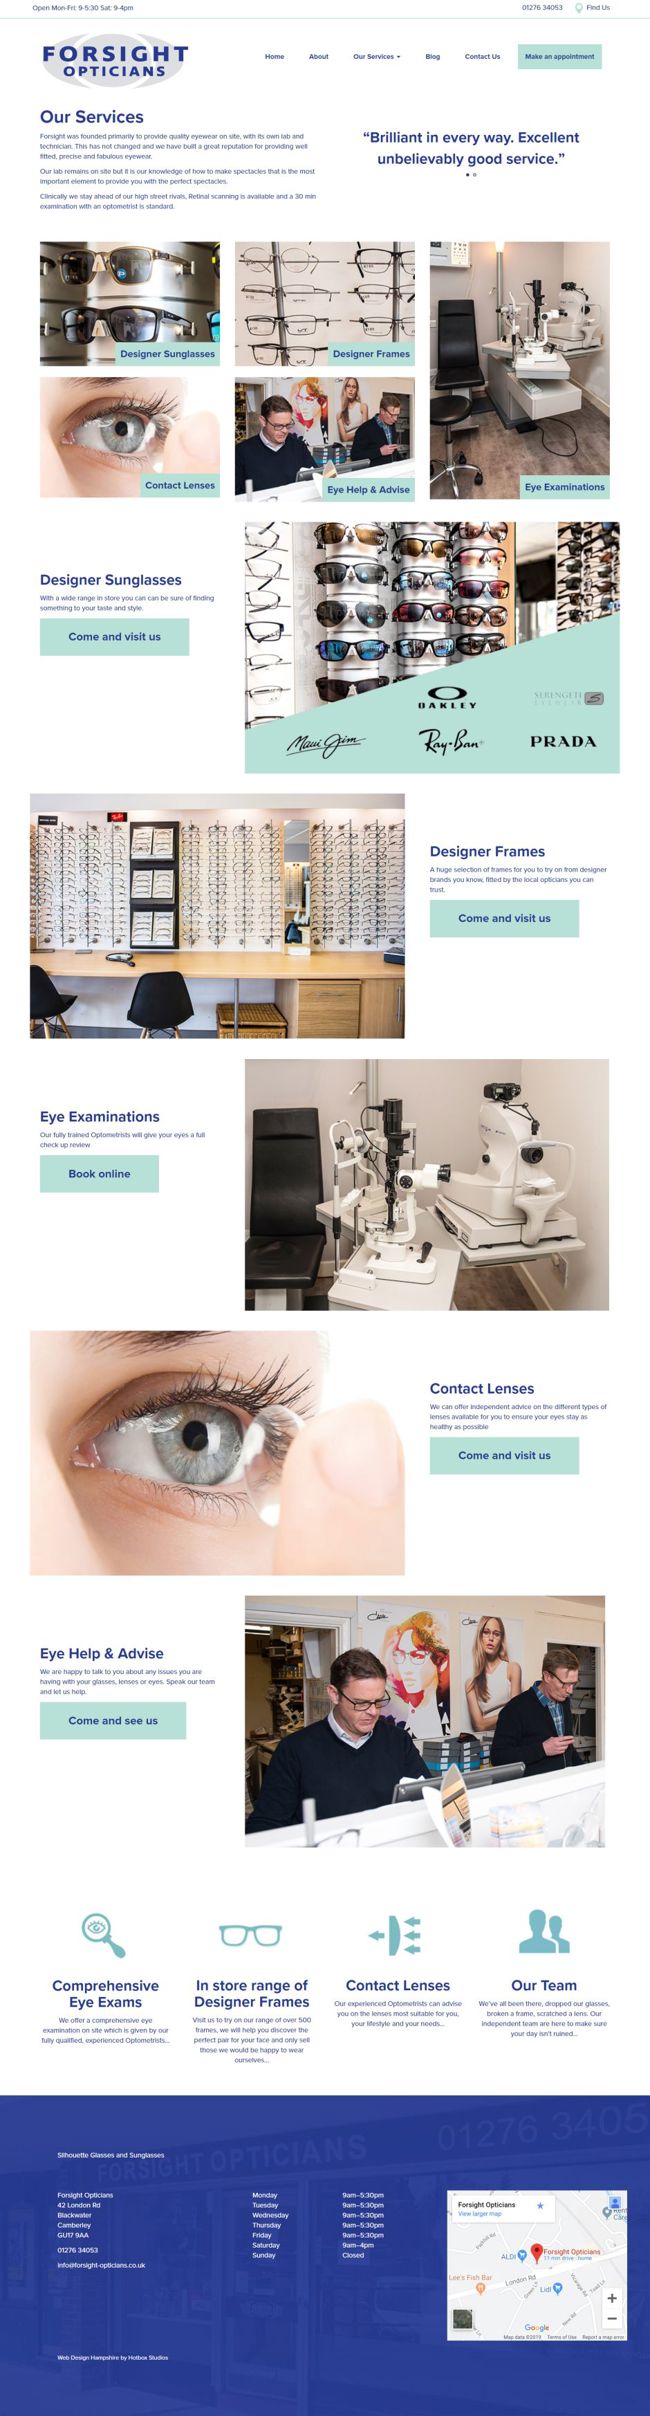 Forsight Opticians Wordpress Web Design SP003 Services